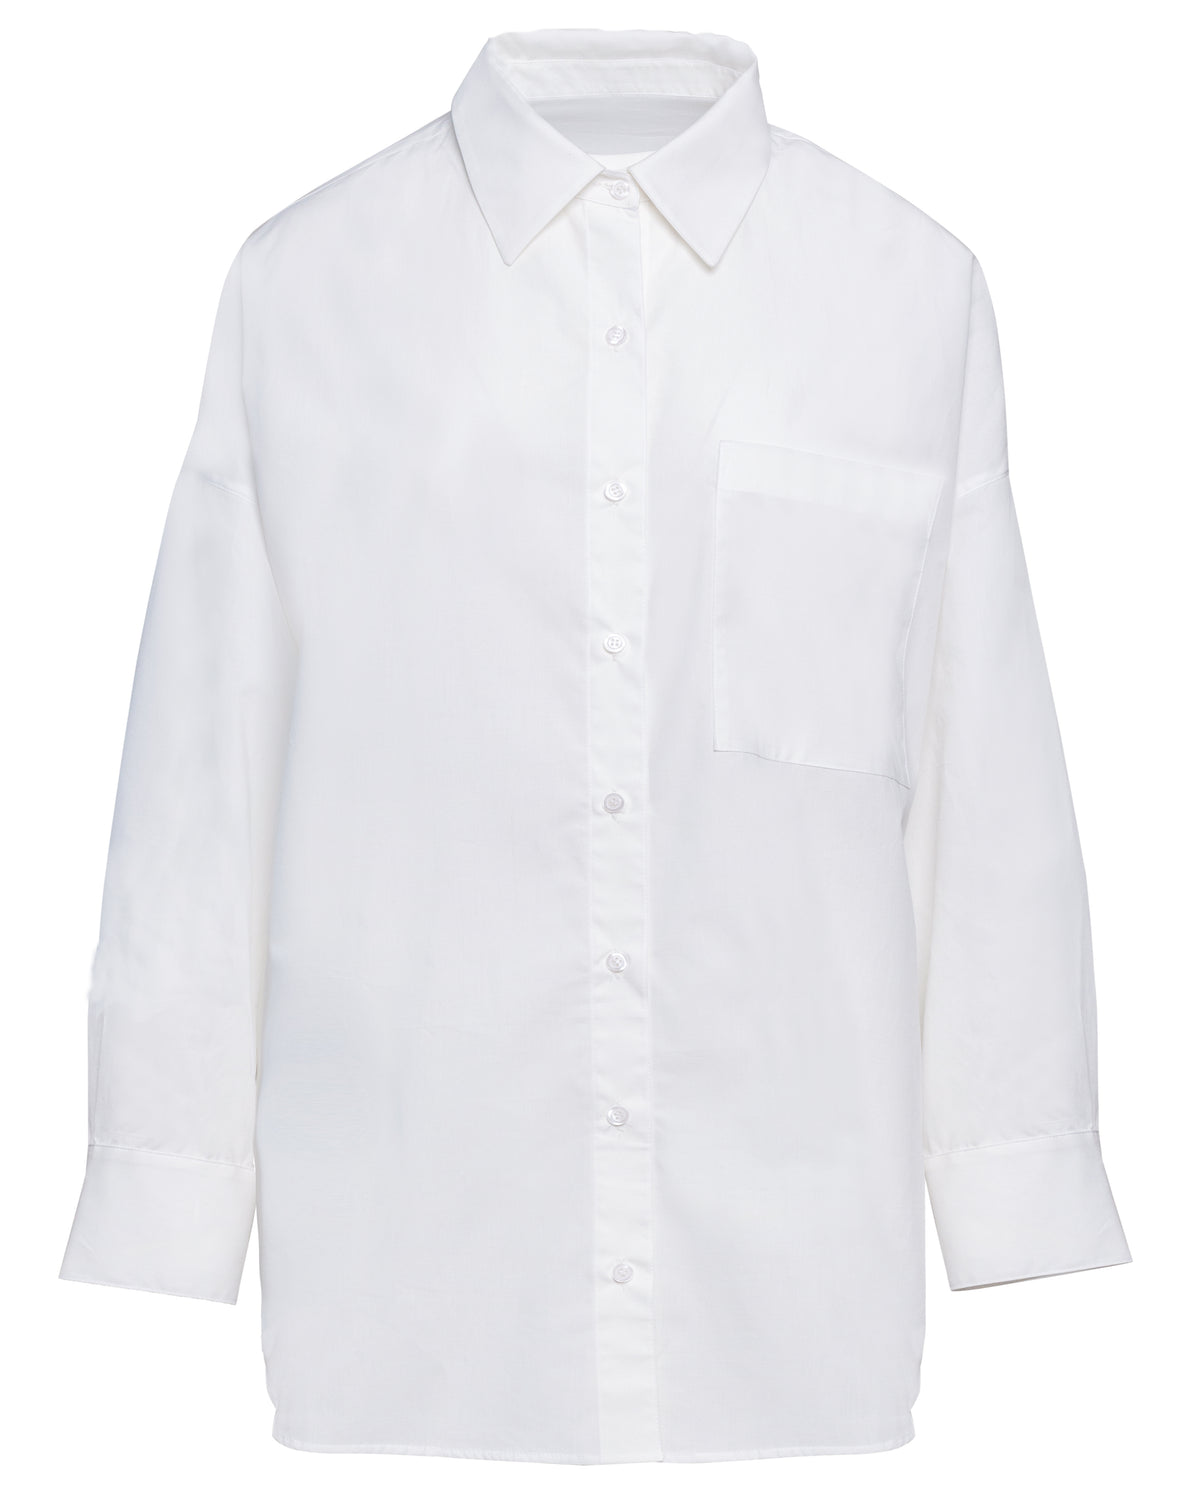 classic white poplin button down shirt